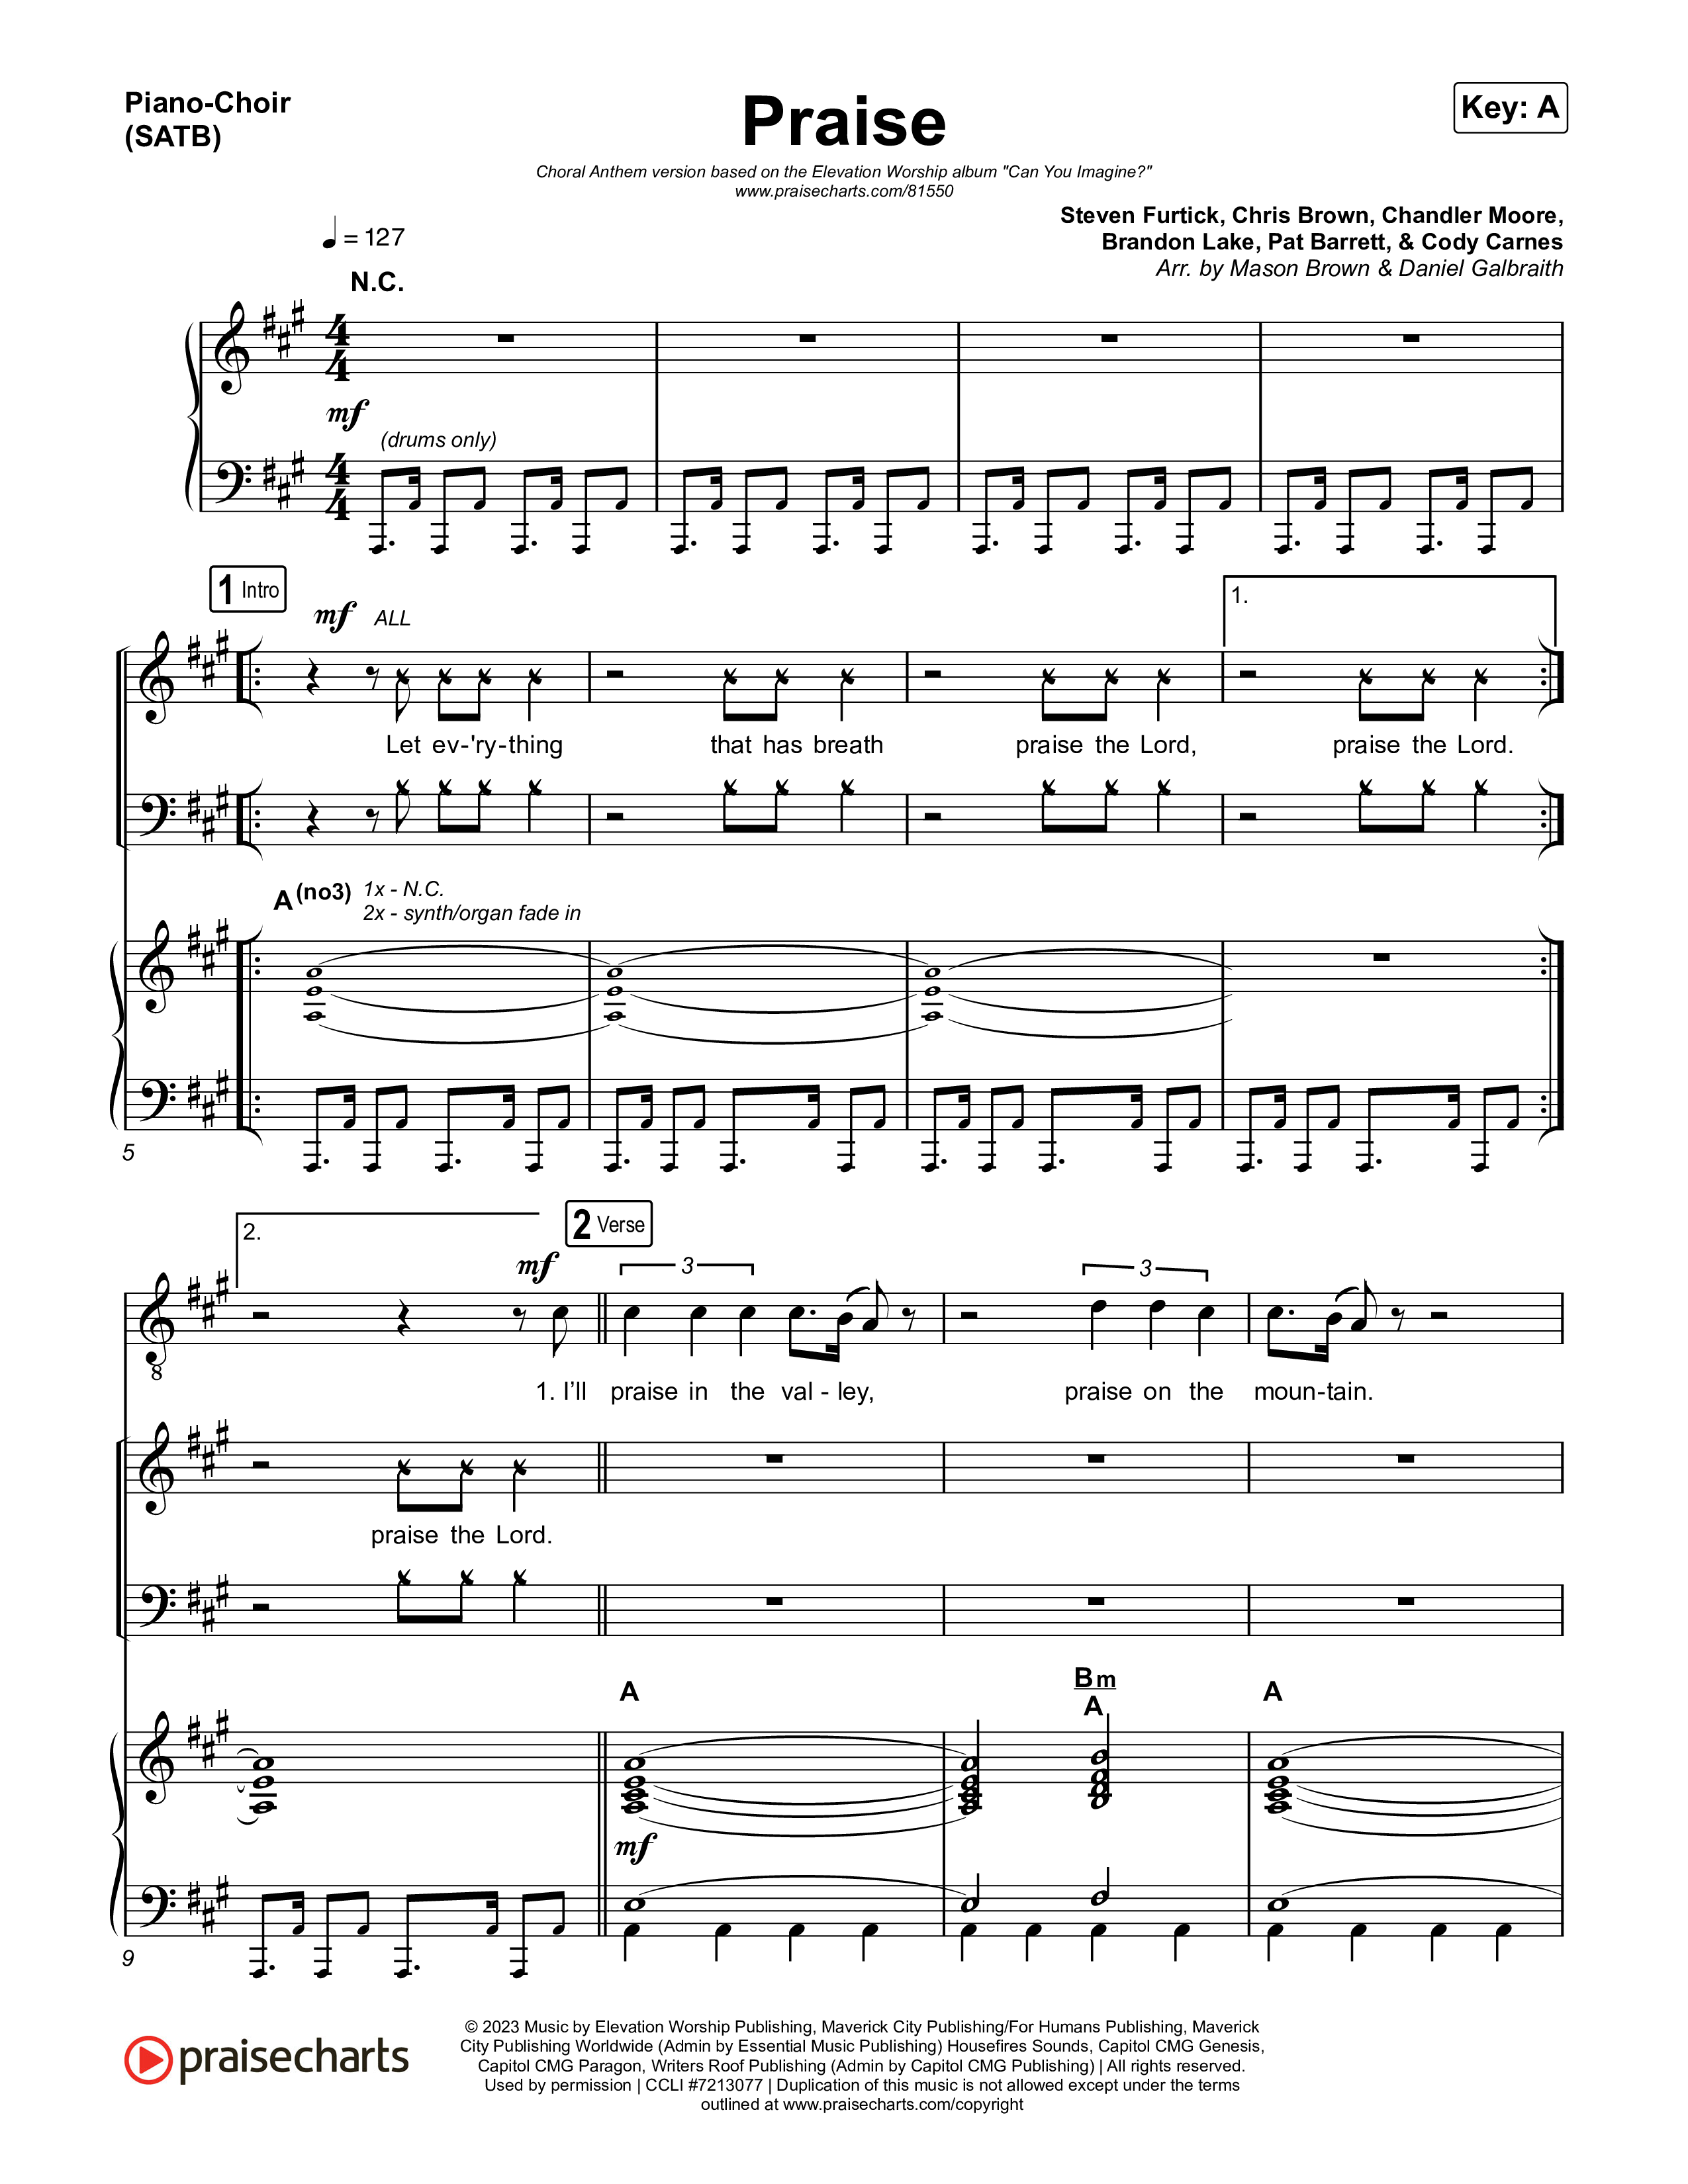 Praise (Choral Anthem SATB) Piano/Vocal (SATB) (Elevation Worship / Chris Brown / Brandon Lake / Chandler Moore / Arr. Mason Brown)